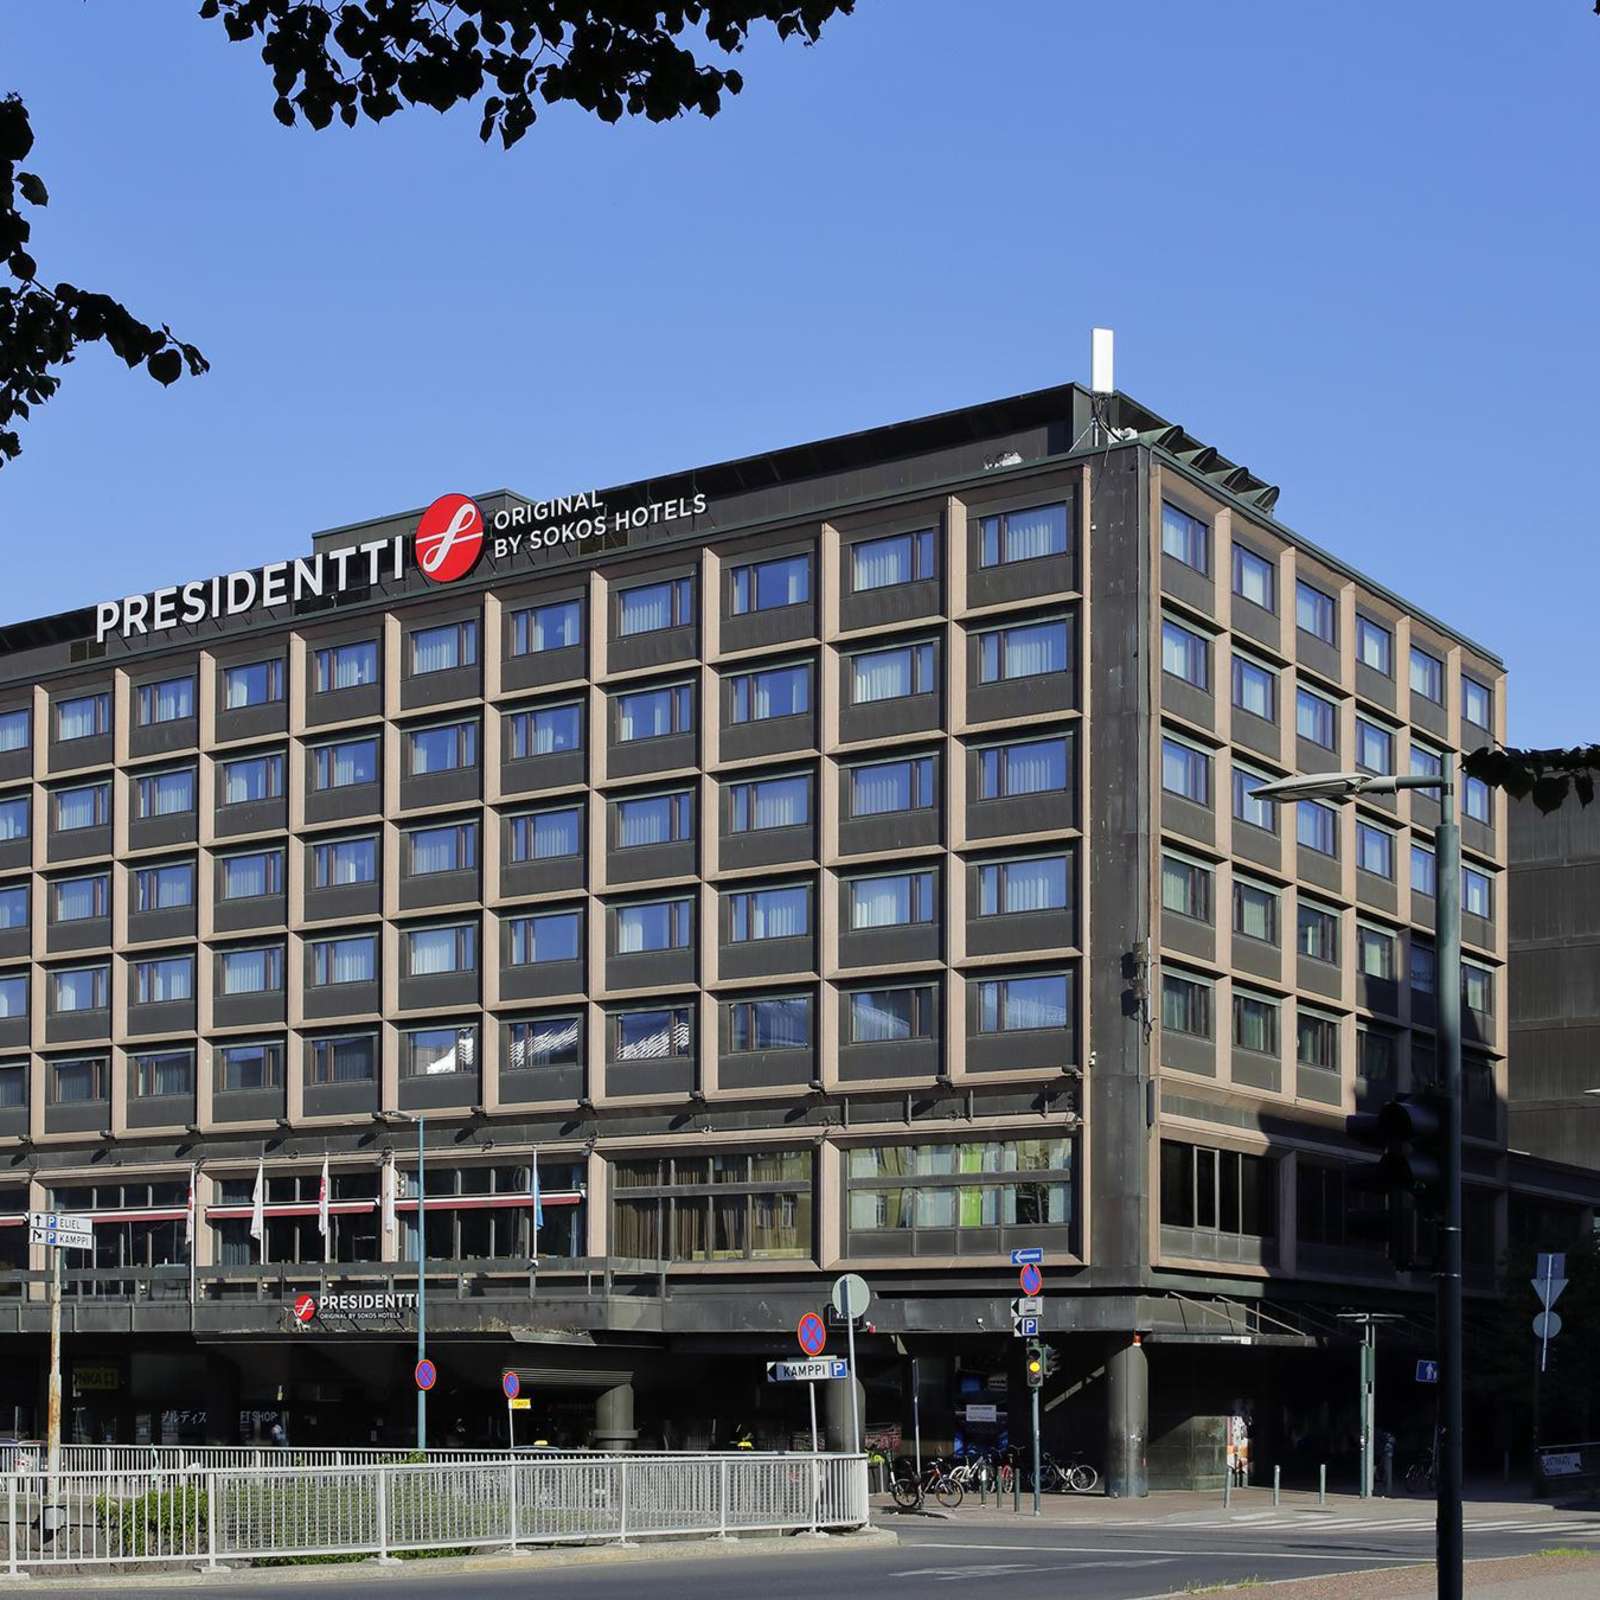 Hotelli Presidentti sijaitsee Helsingin Kampissa.